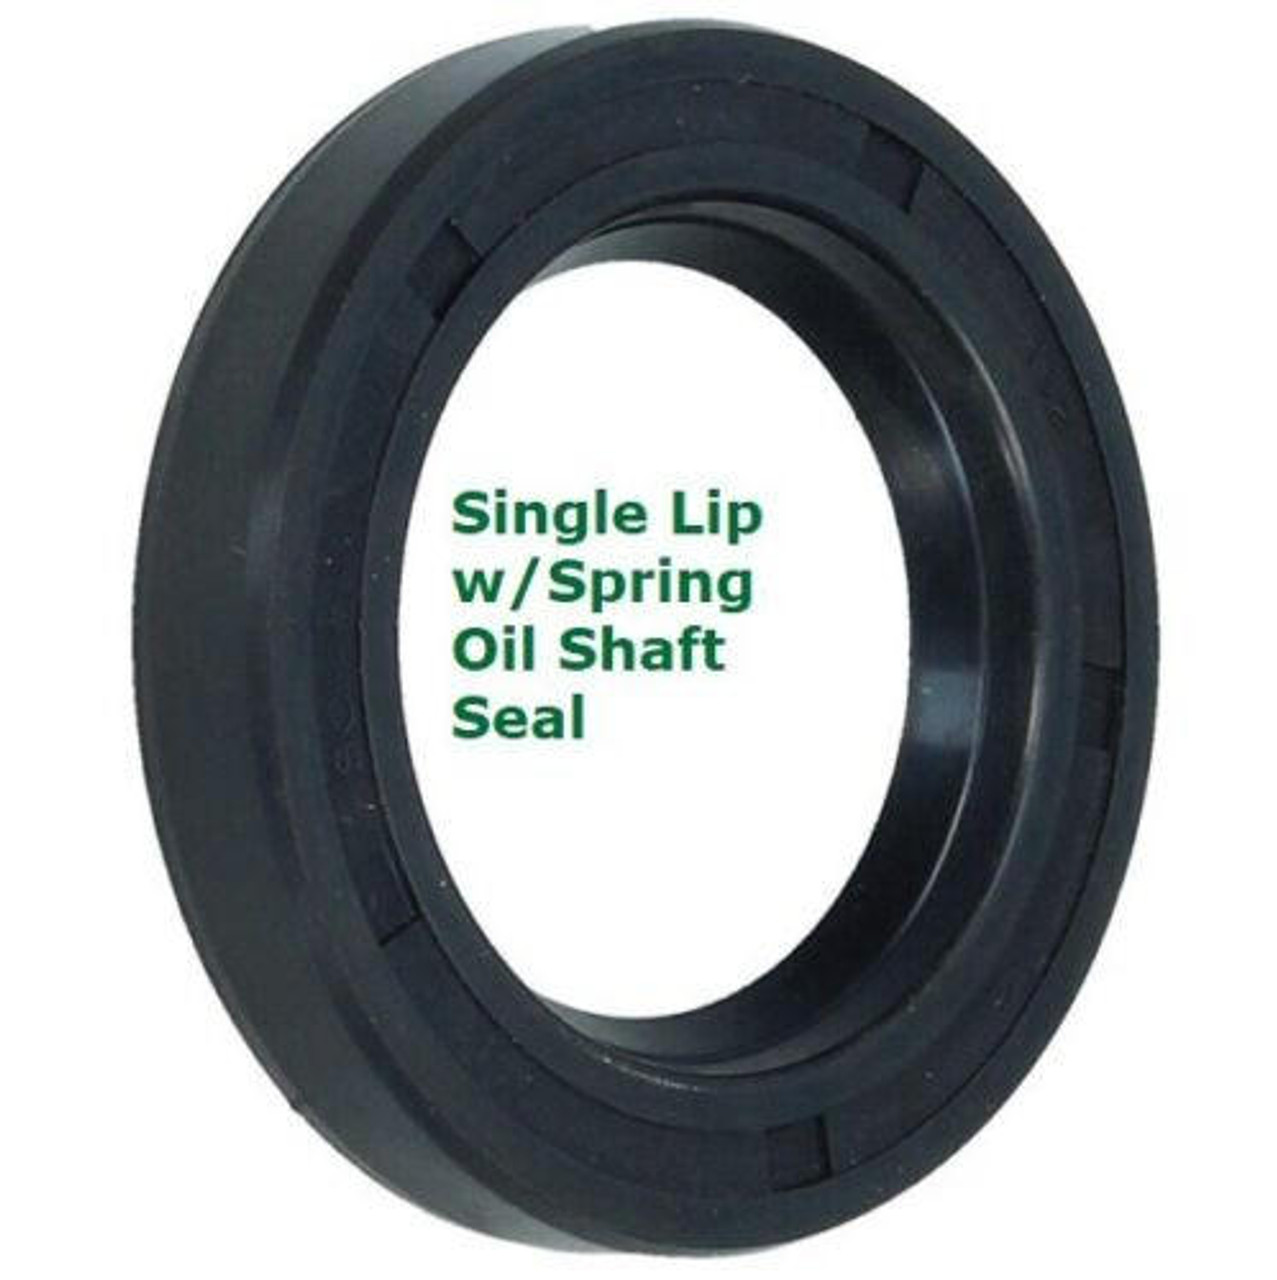 Metric Oil Shaft Seal 25 x 35 x 8mm Single Lip   Price for 1 pc